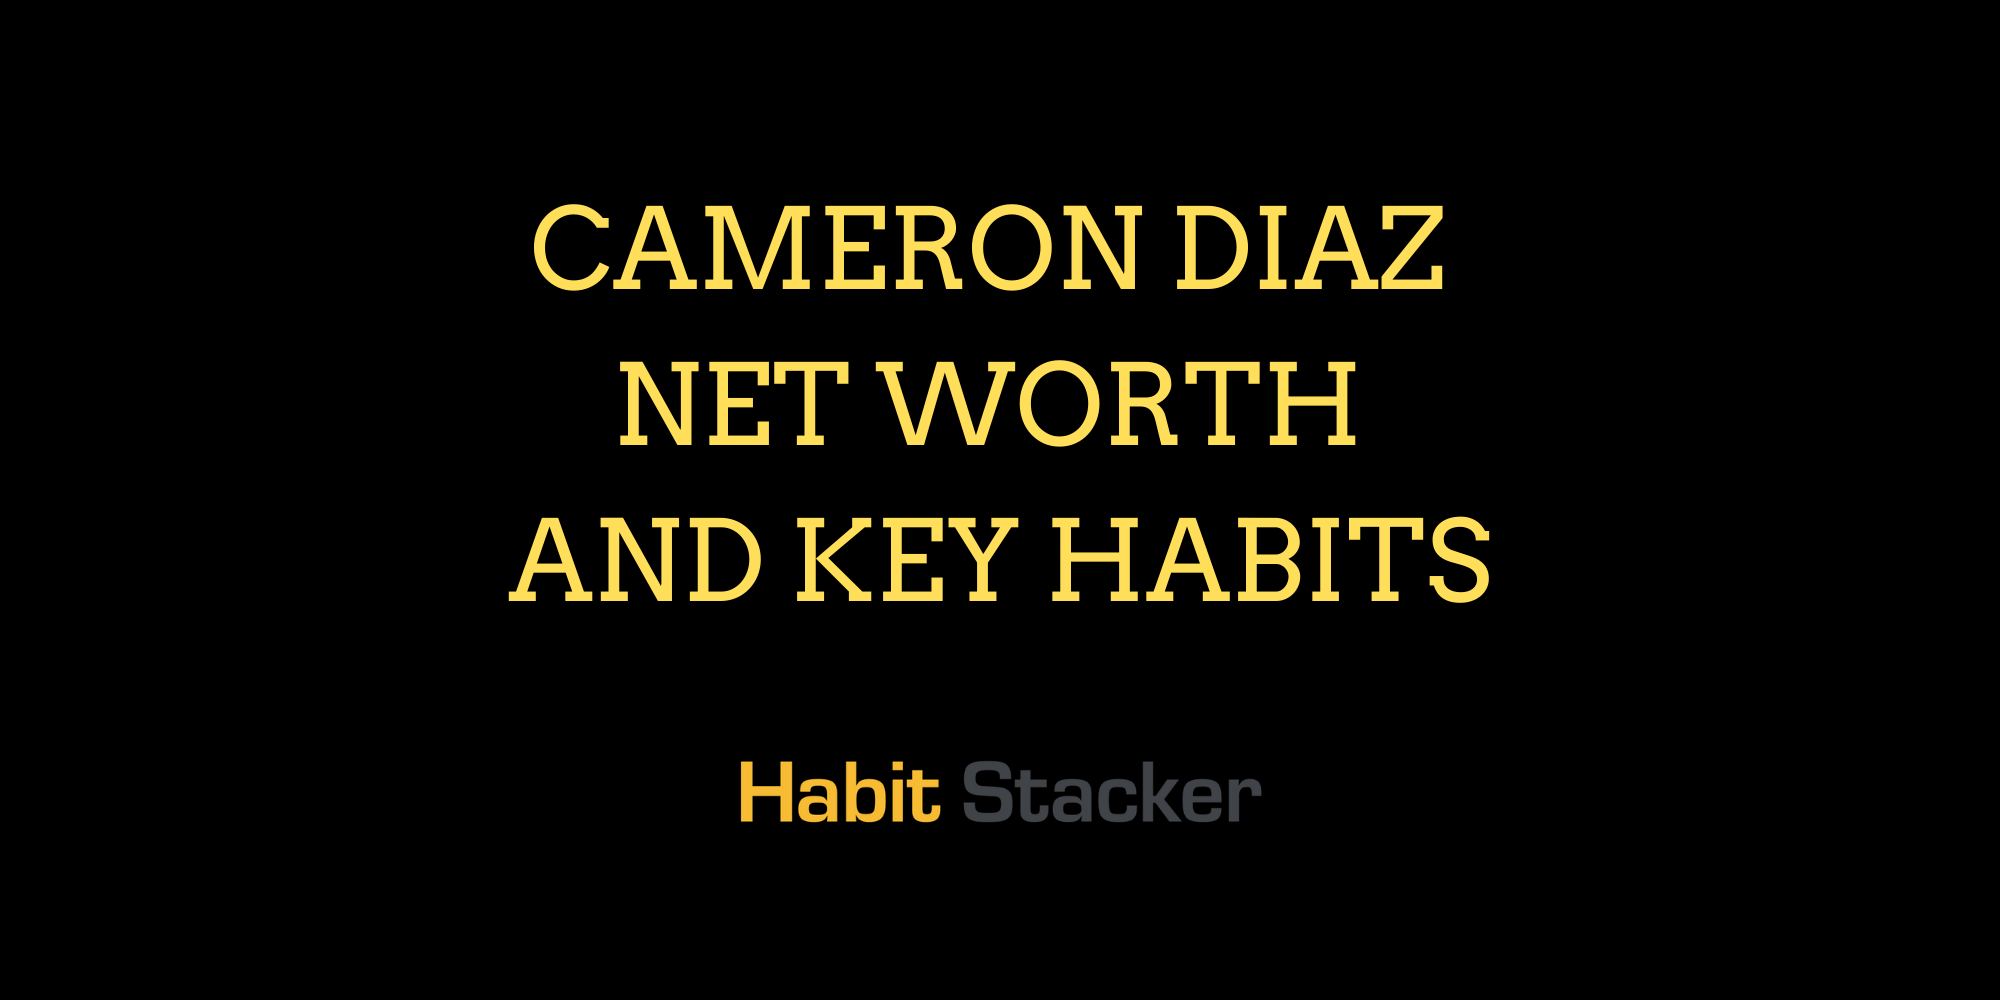 Cameron Diaz Net Worth and Key Habits